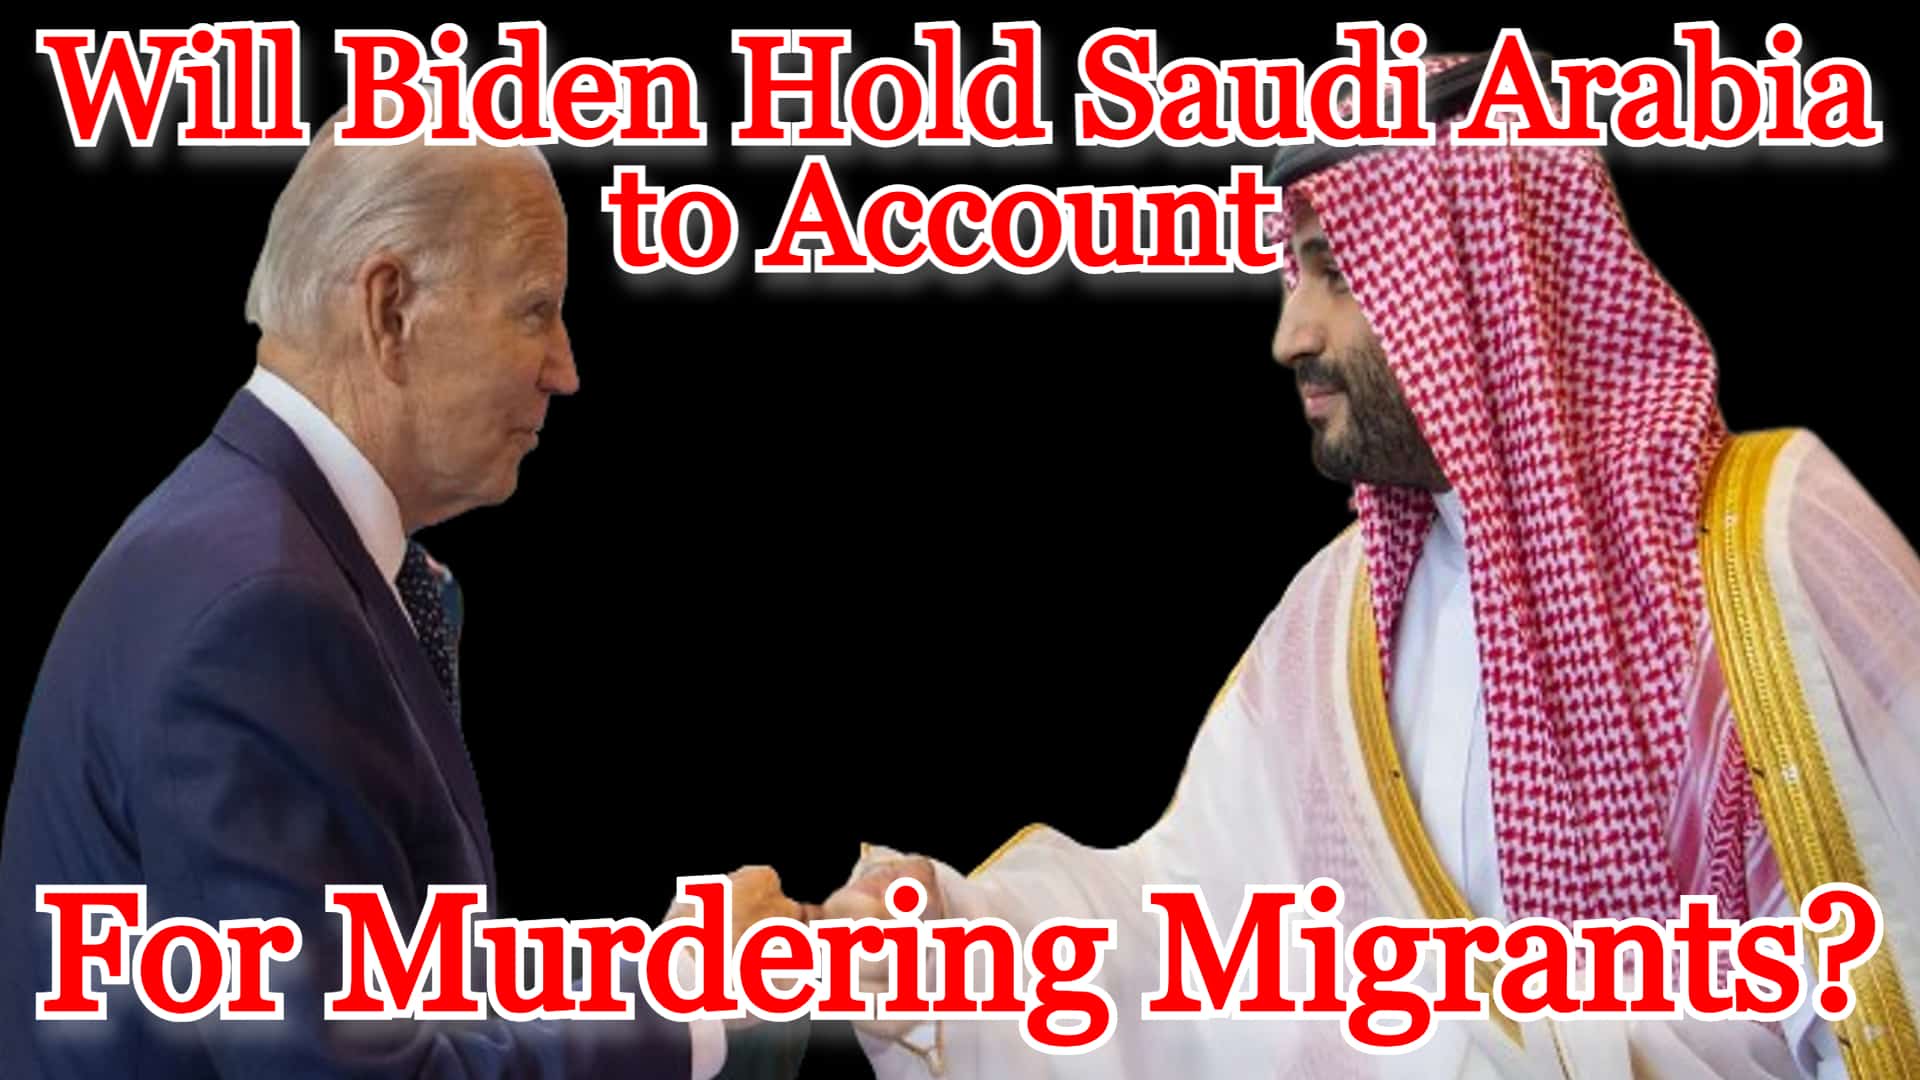 COI #462: Will Biden Hold Saudi Arabia to Account for Murdering Migrants?